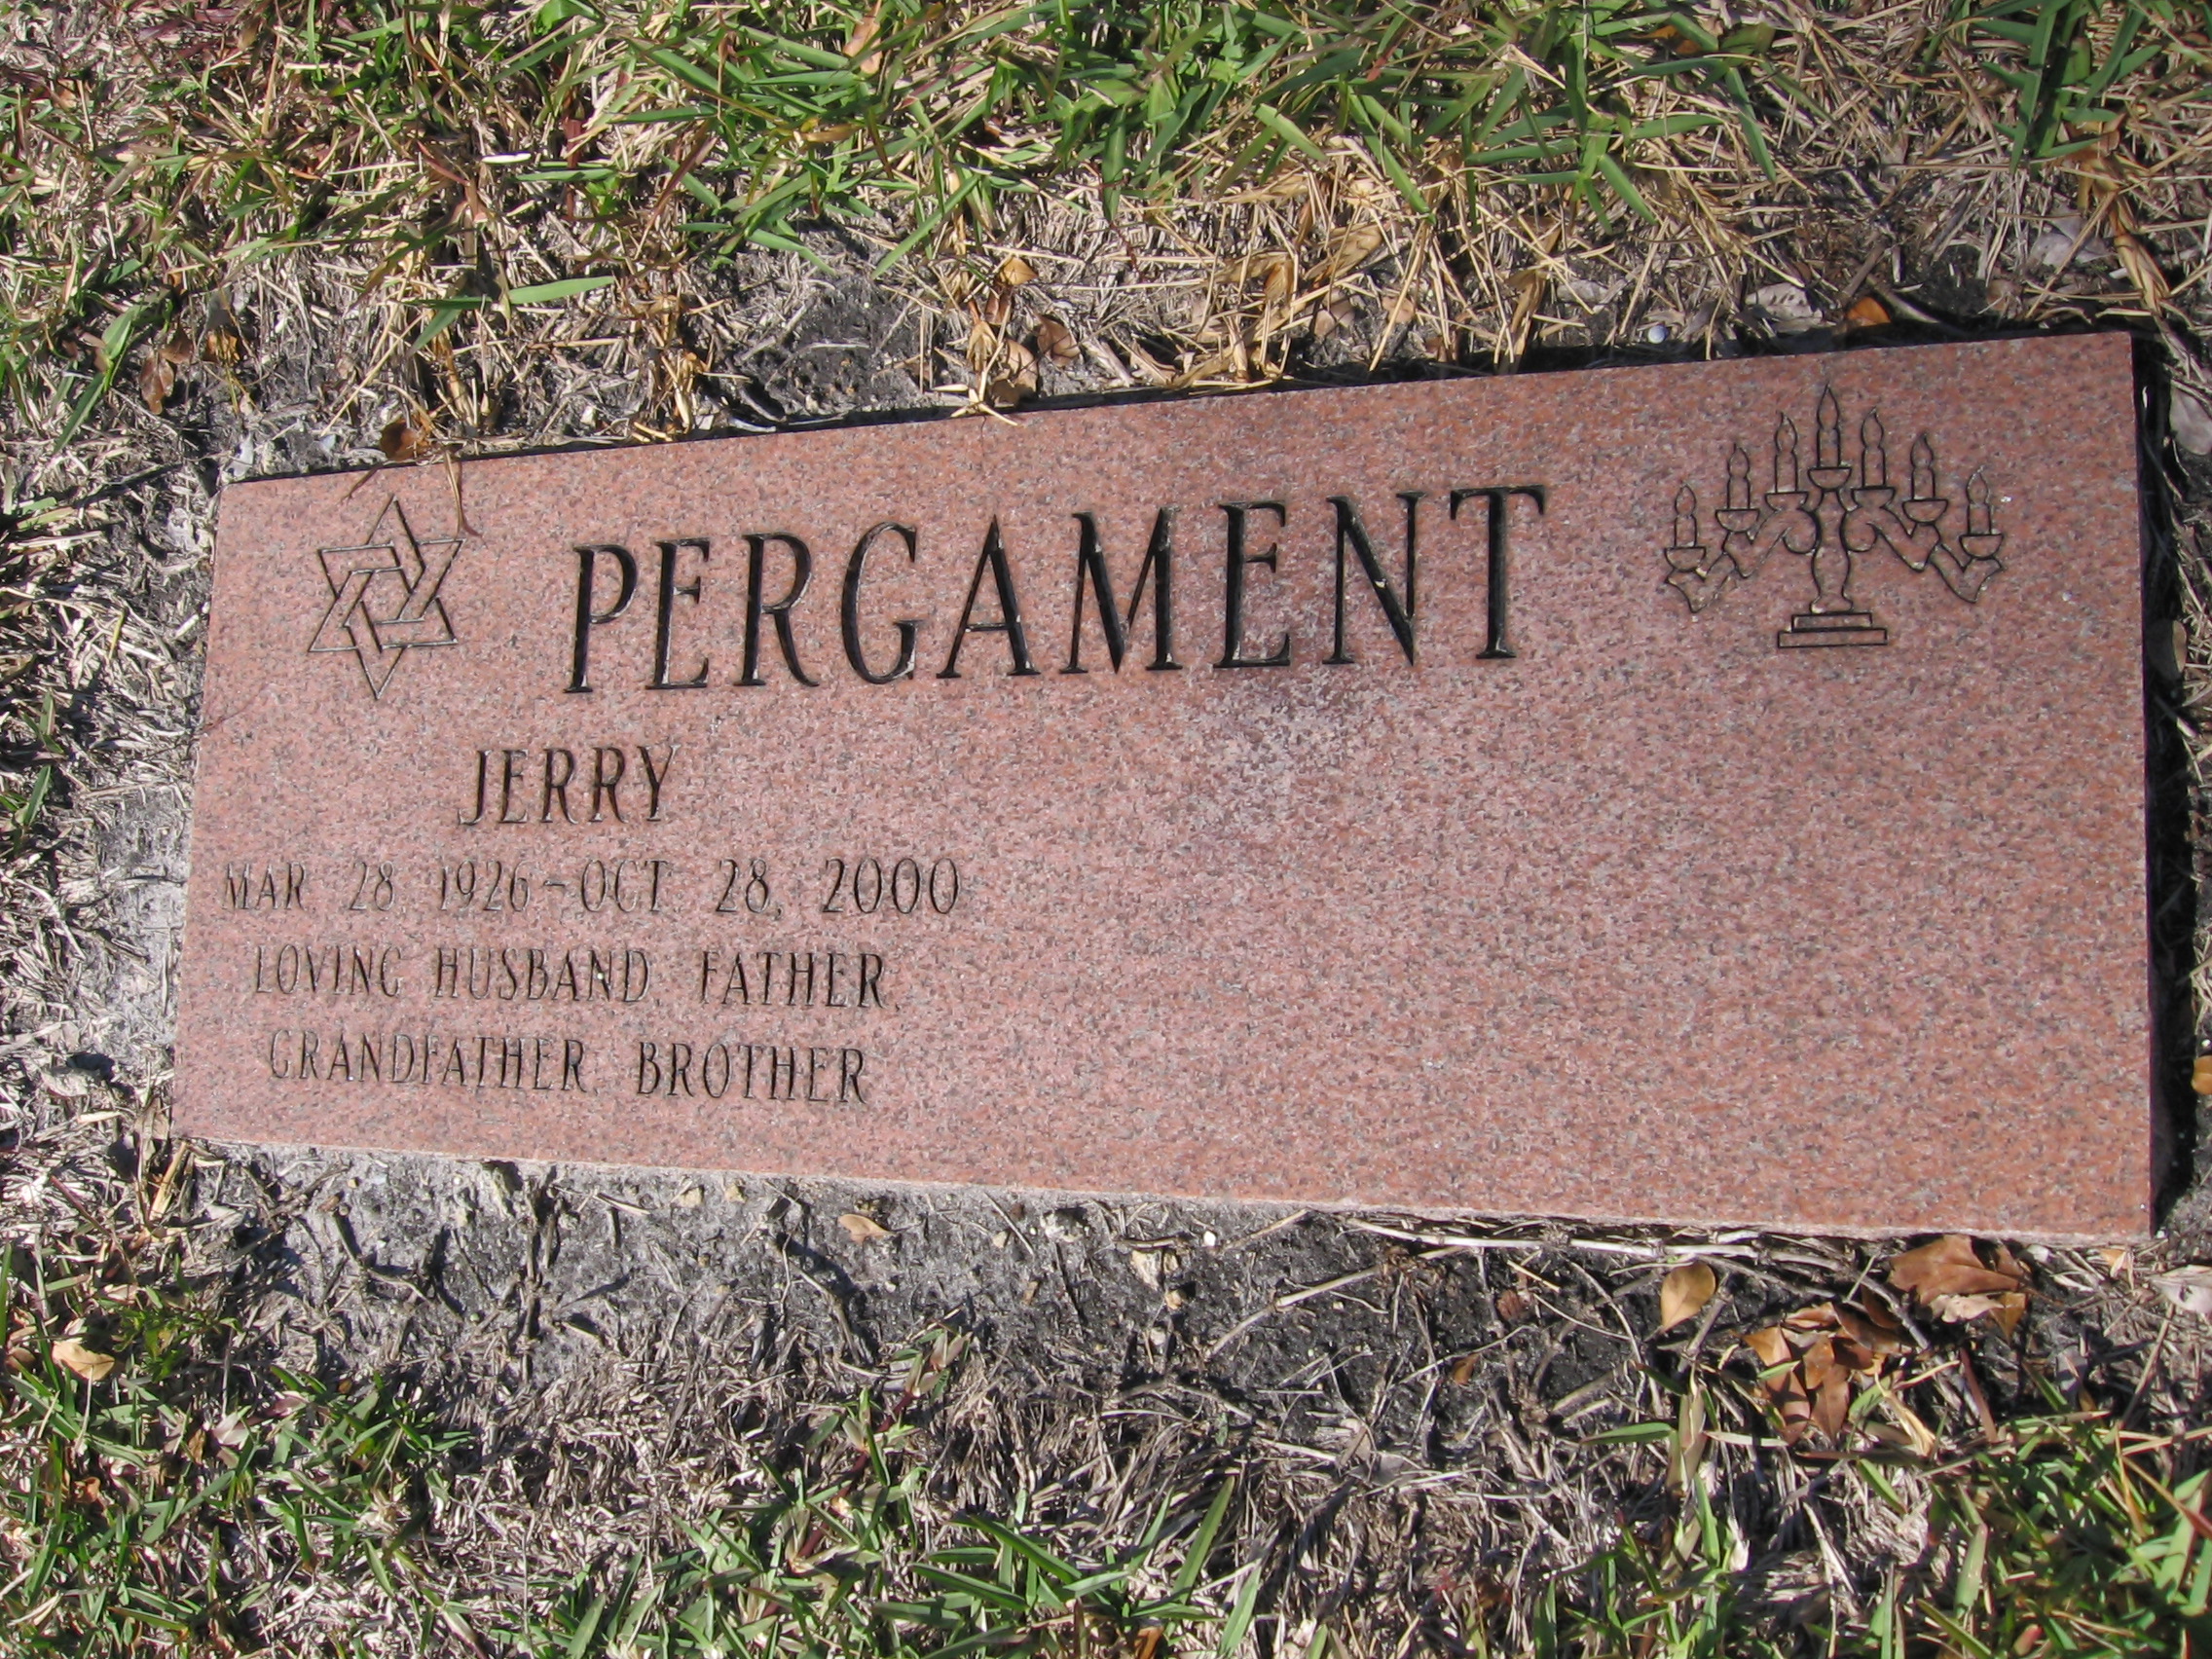 Jerry Pergament